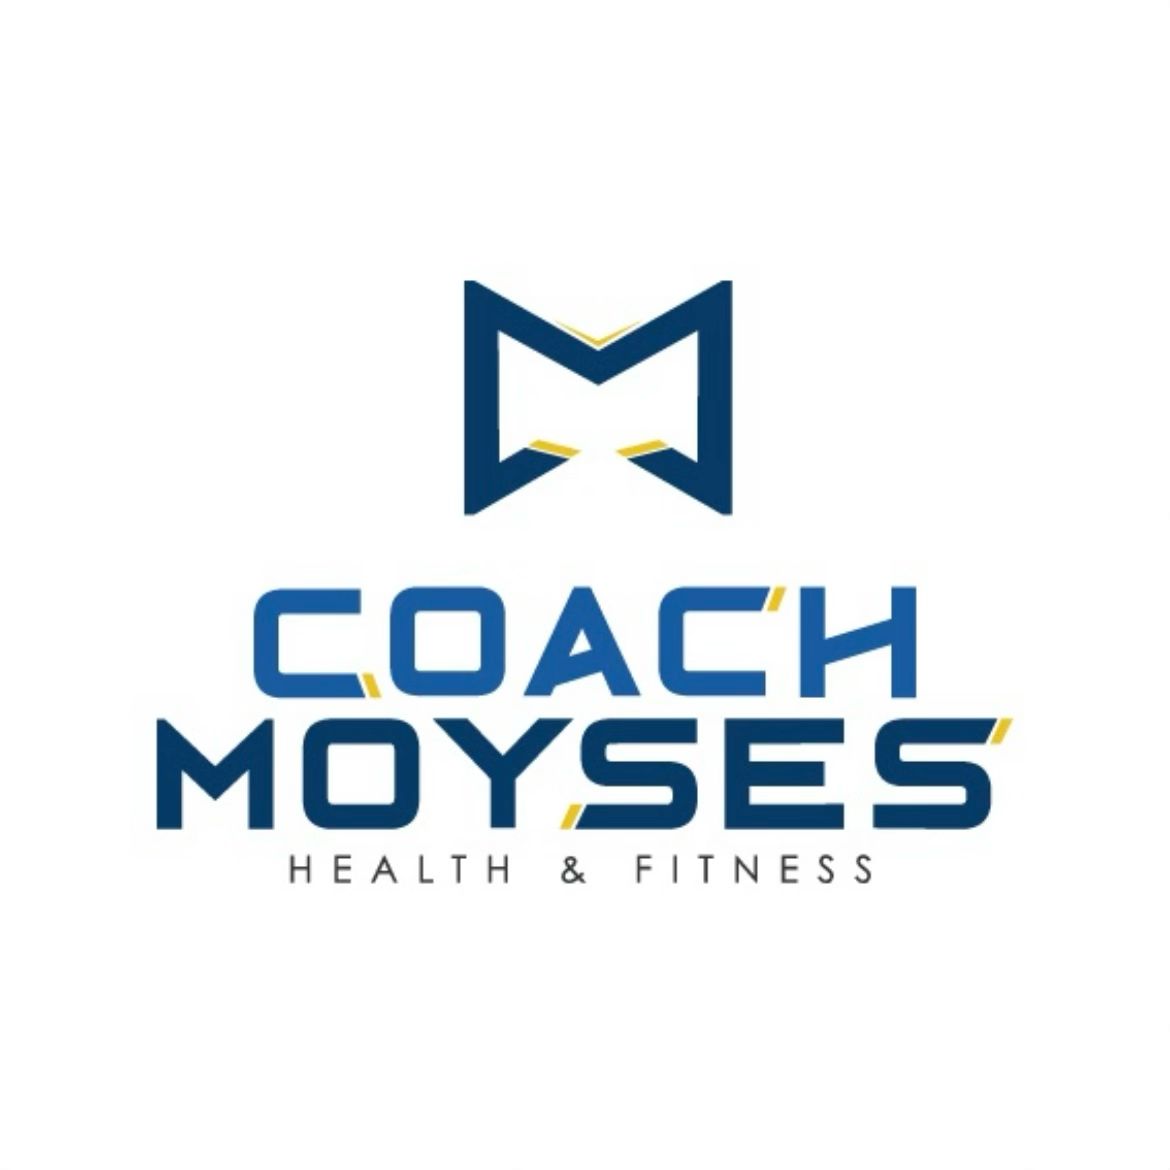 Coach Moyses Health & Fitness